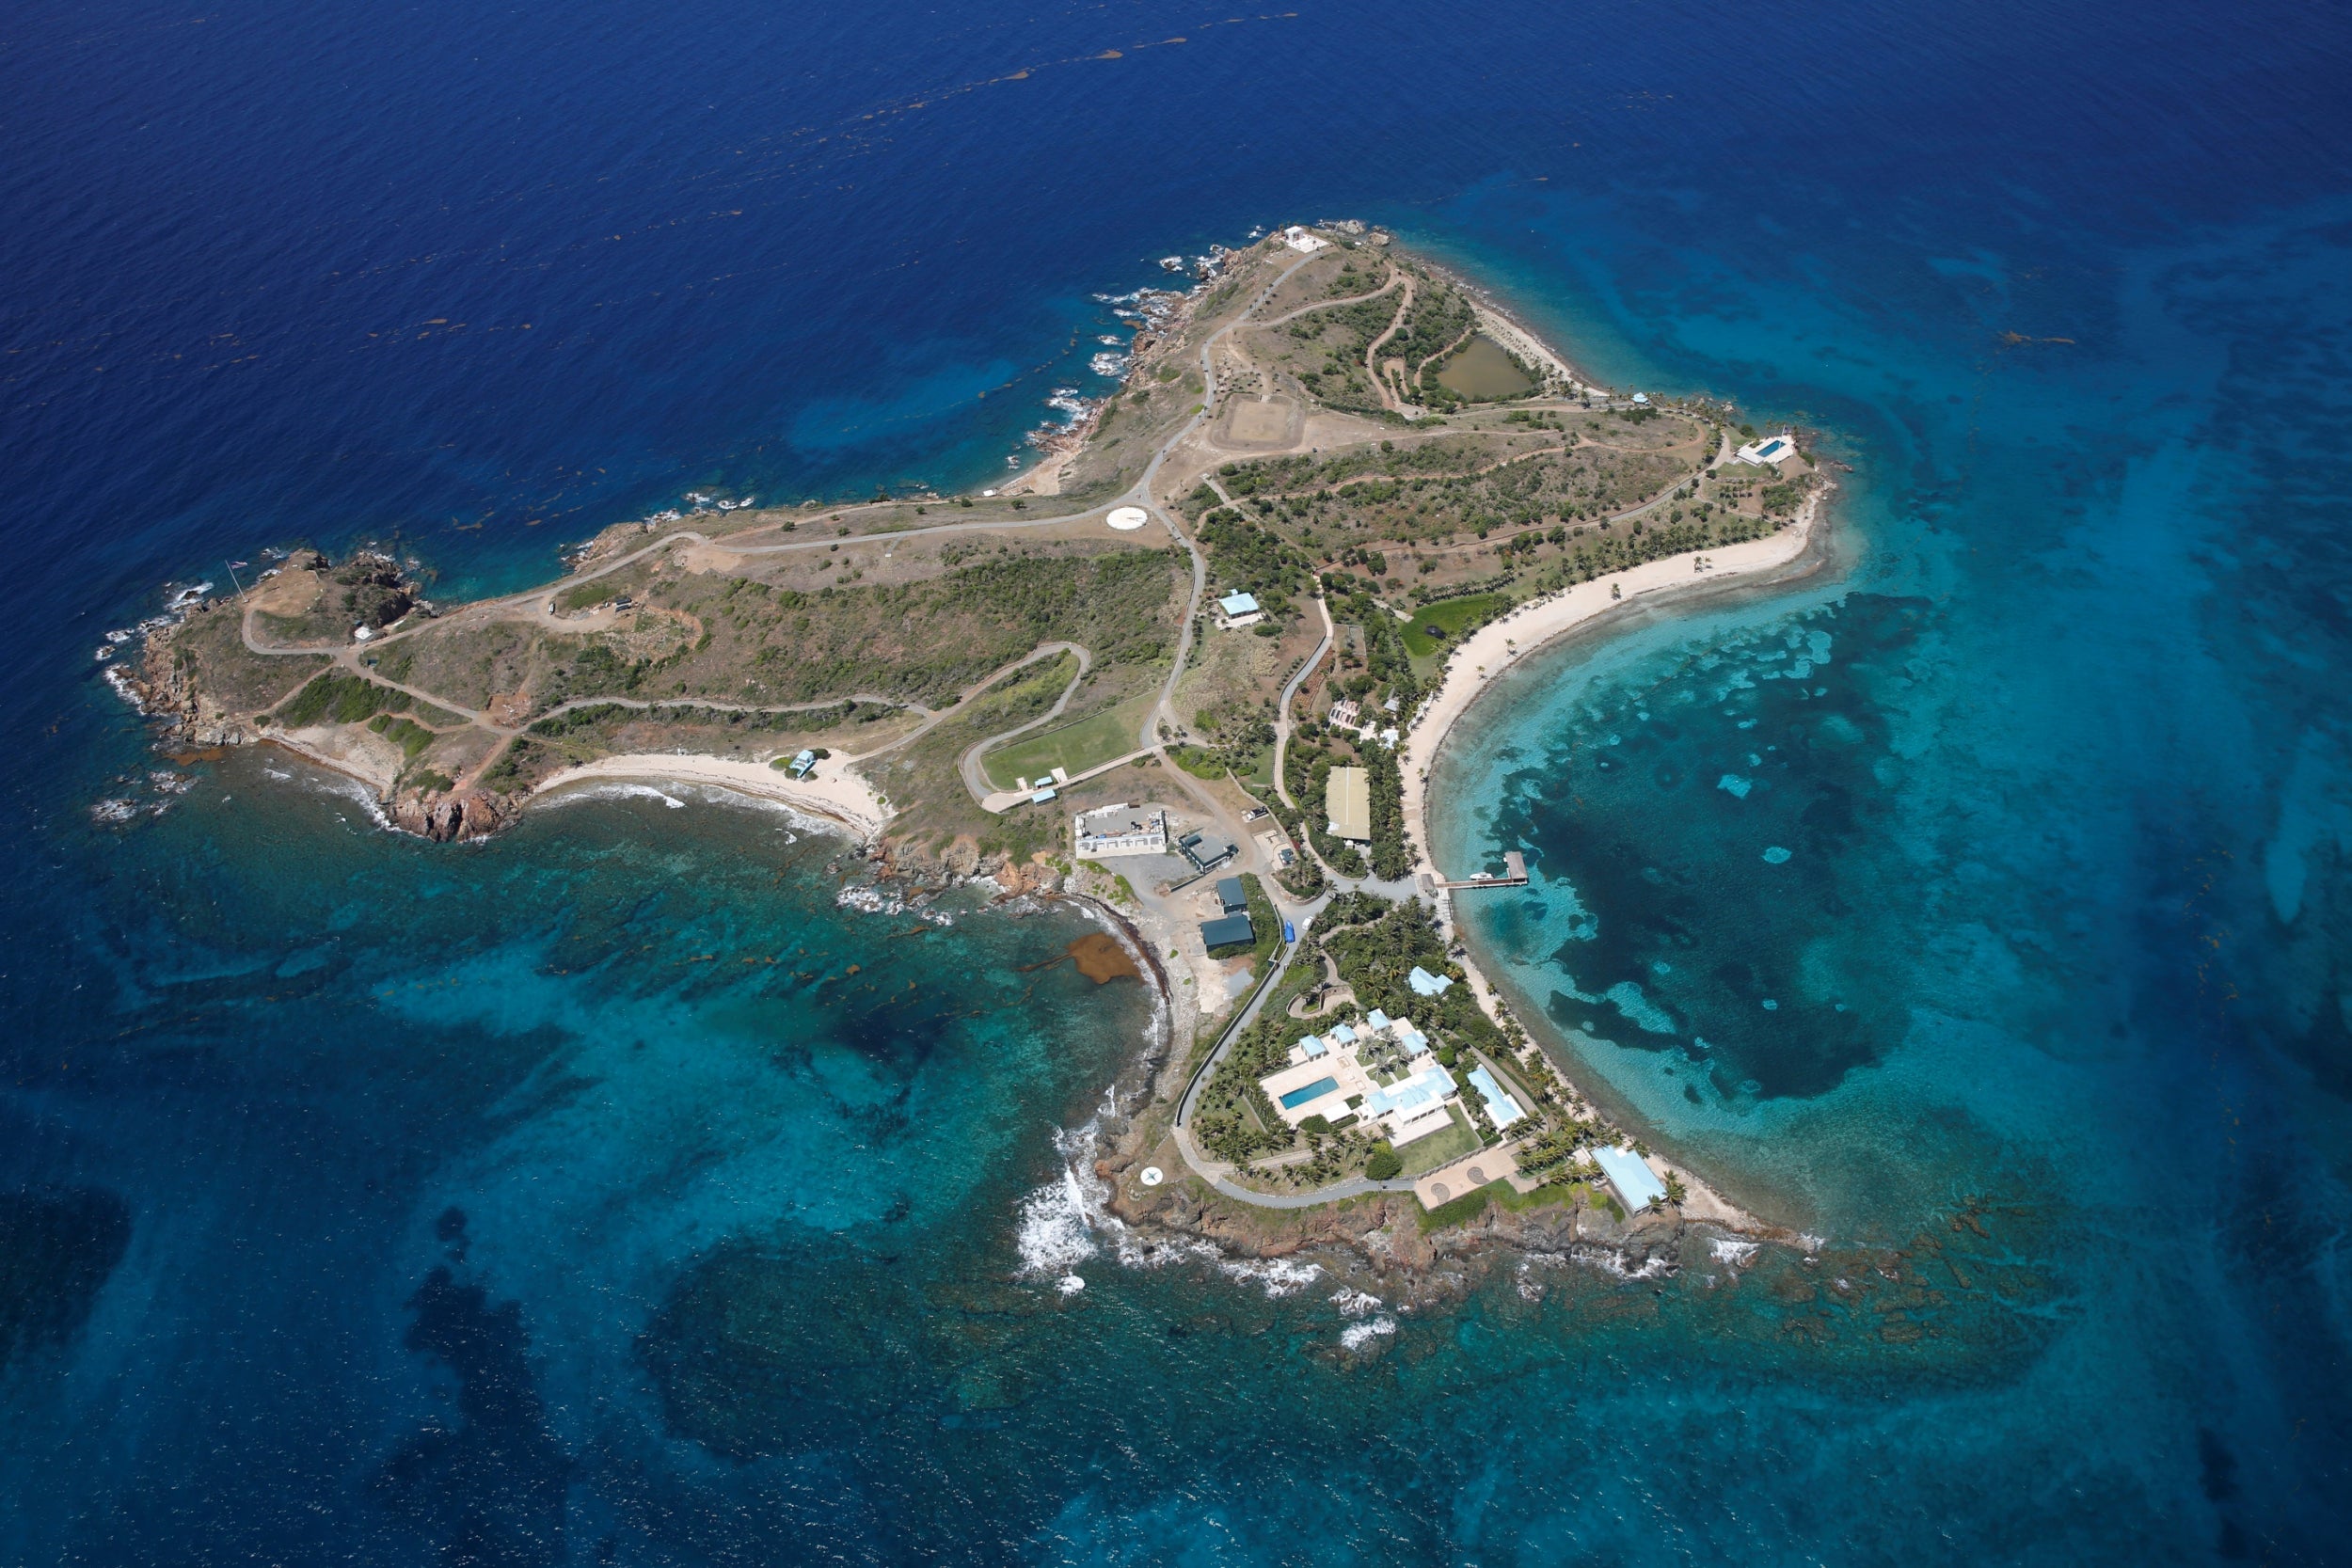 Little St James Island, one of the properties of financier Jeffrey Epstein, is seen in an aerial view in July